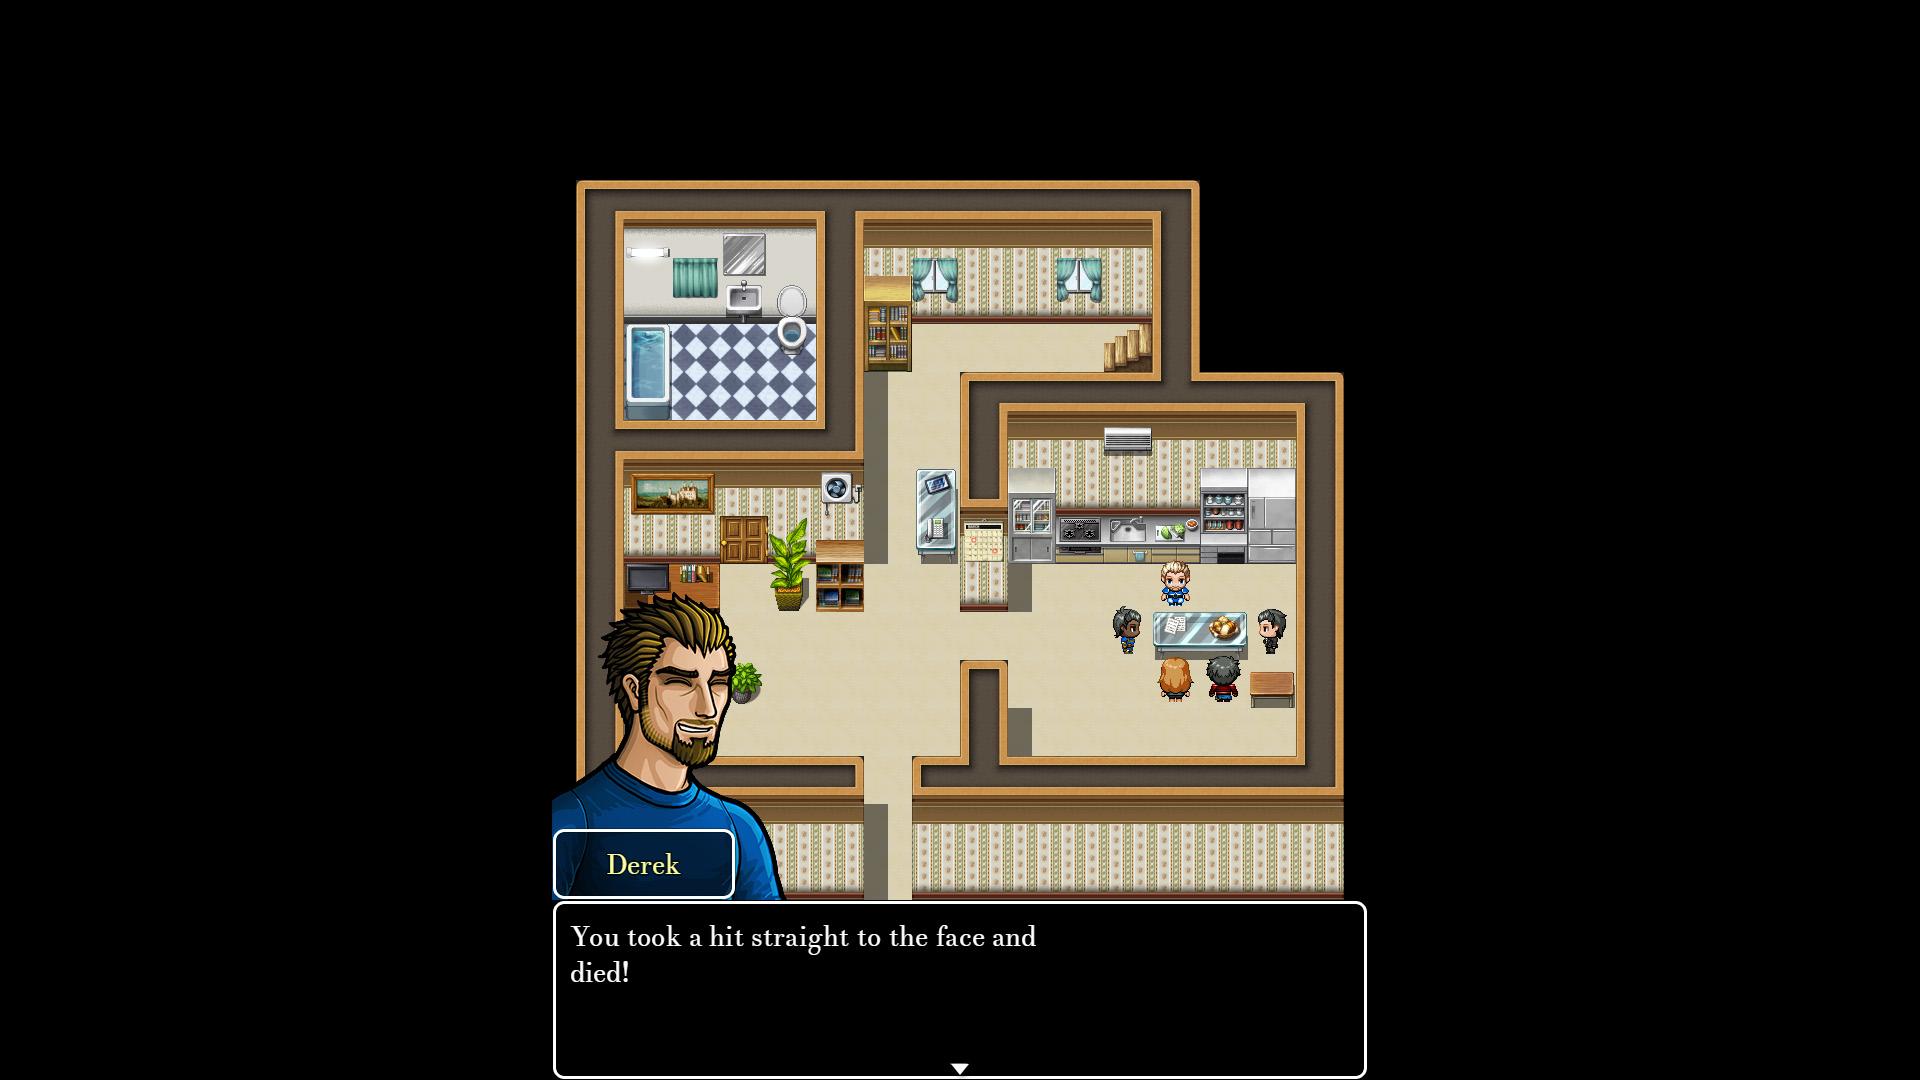 Screenshot №7 from game The Ember Saga: A New Fire